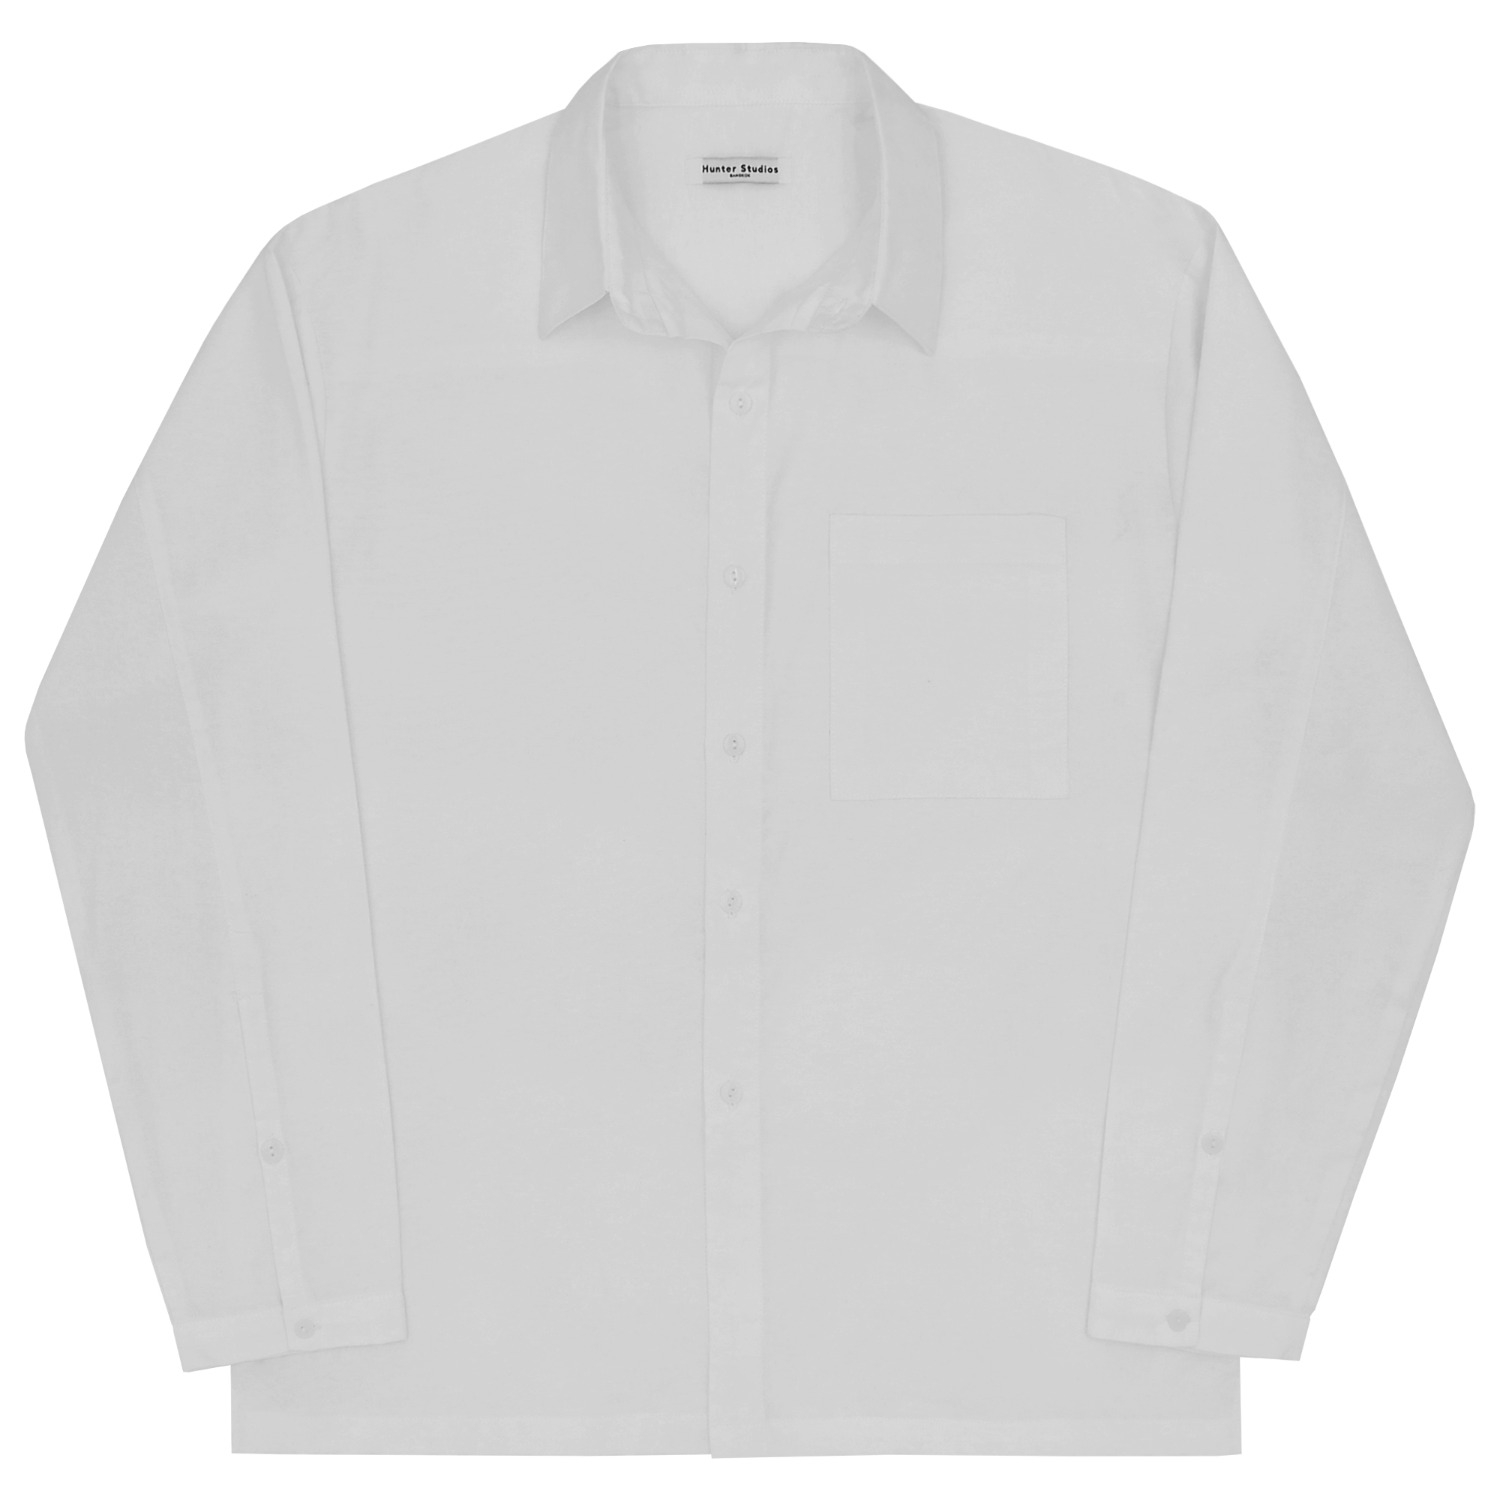 Fainly Long Shirt (White)